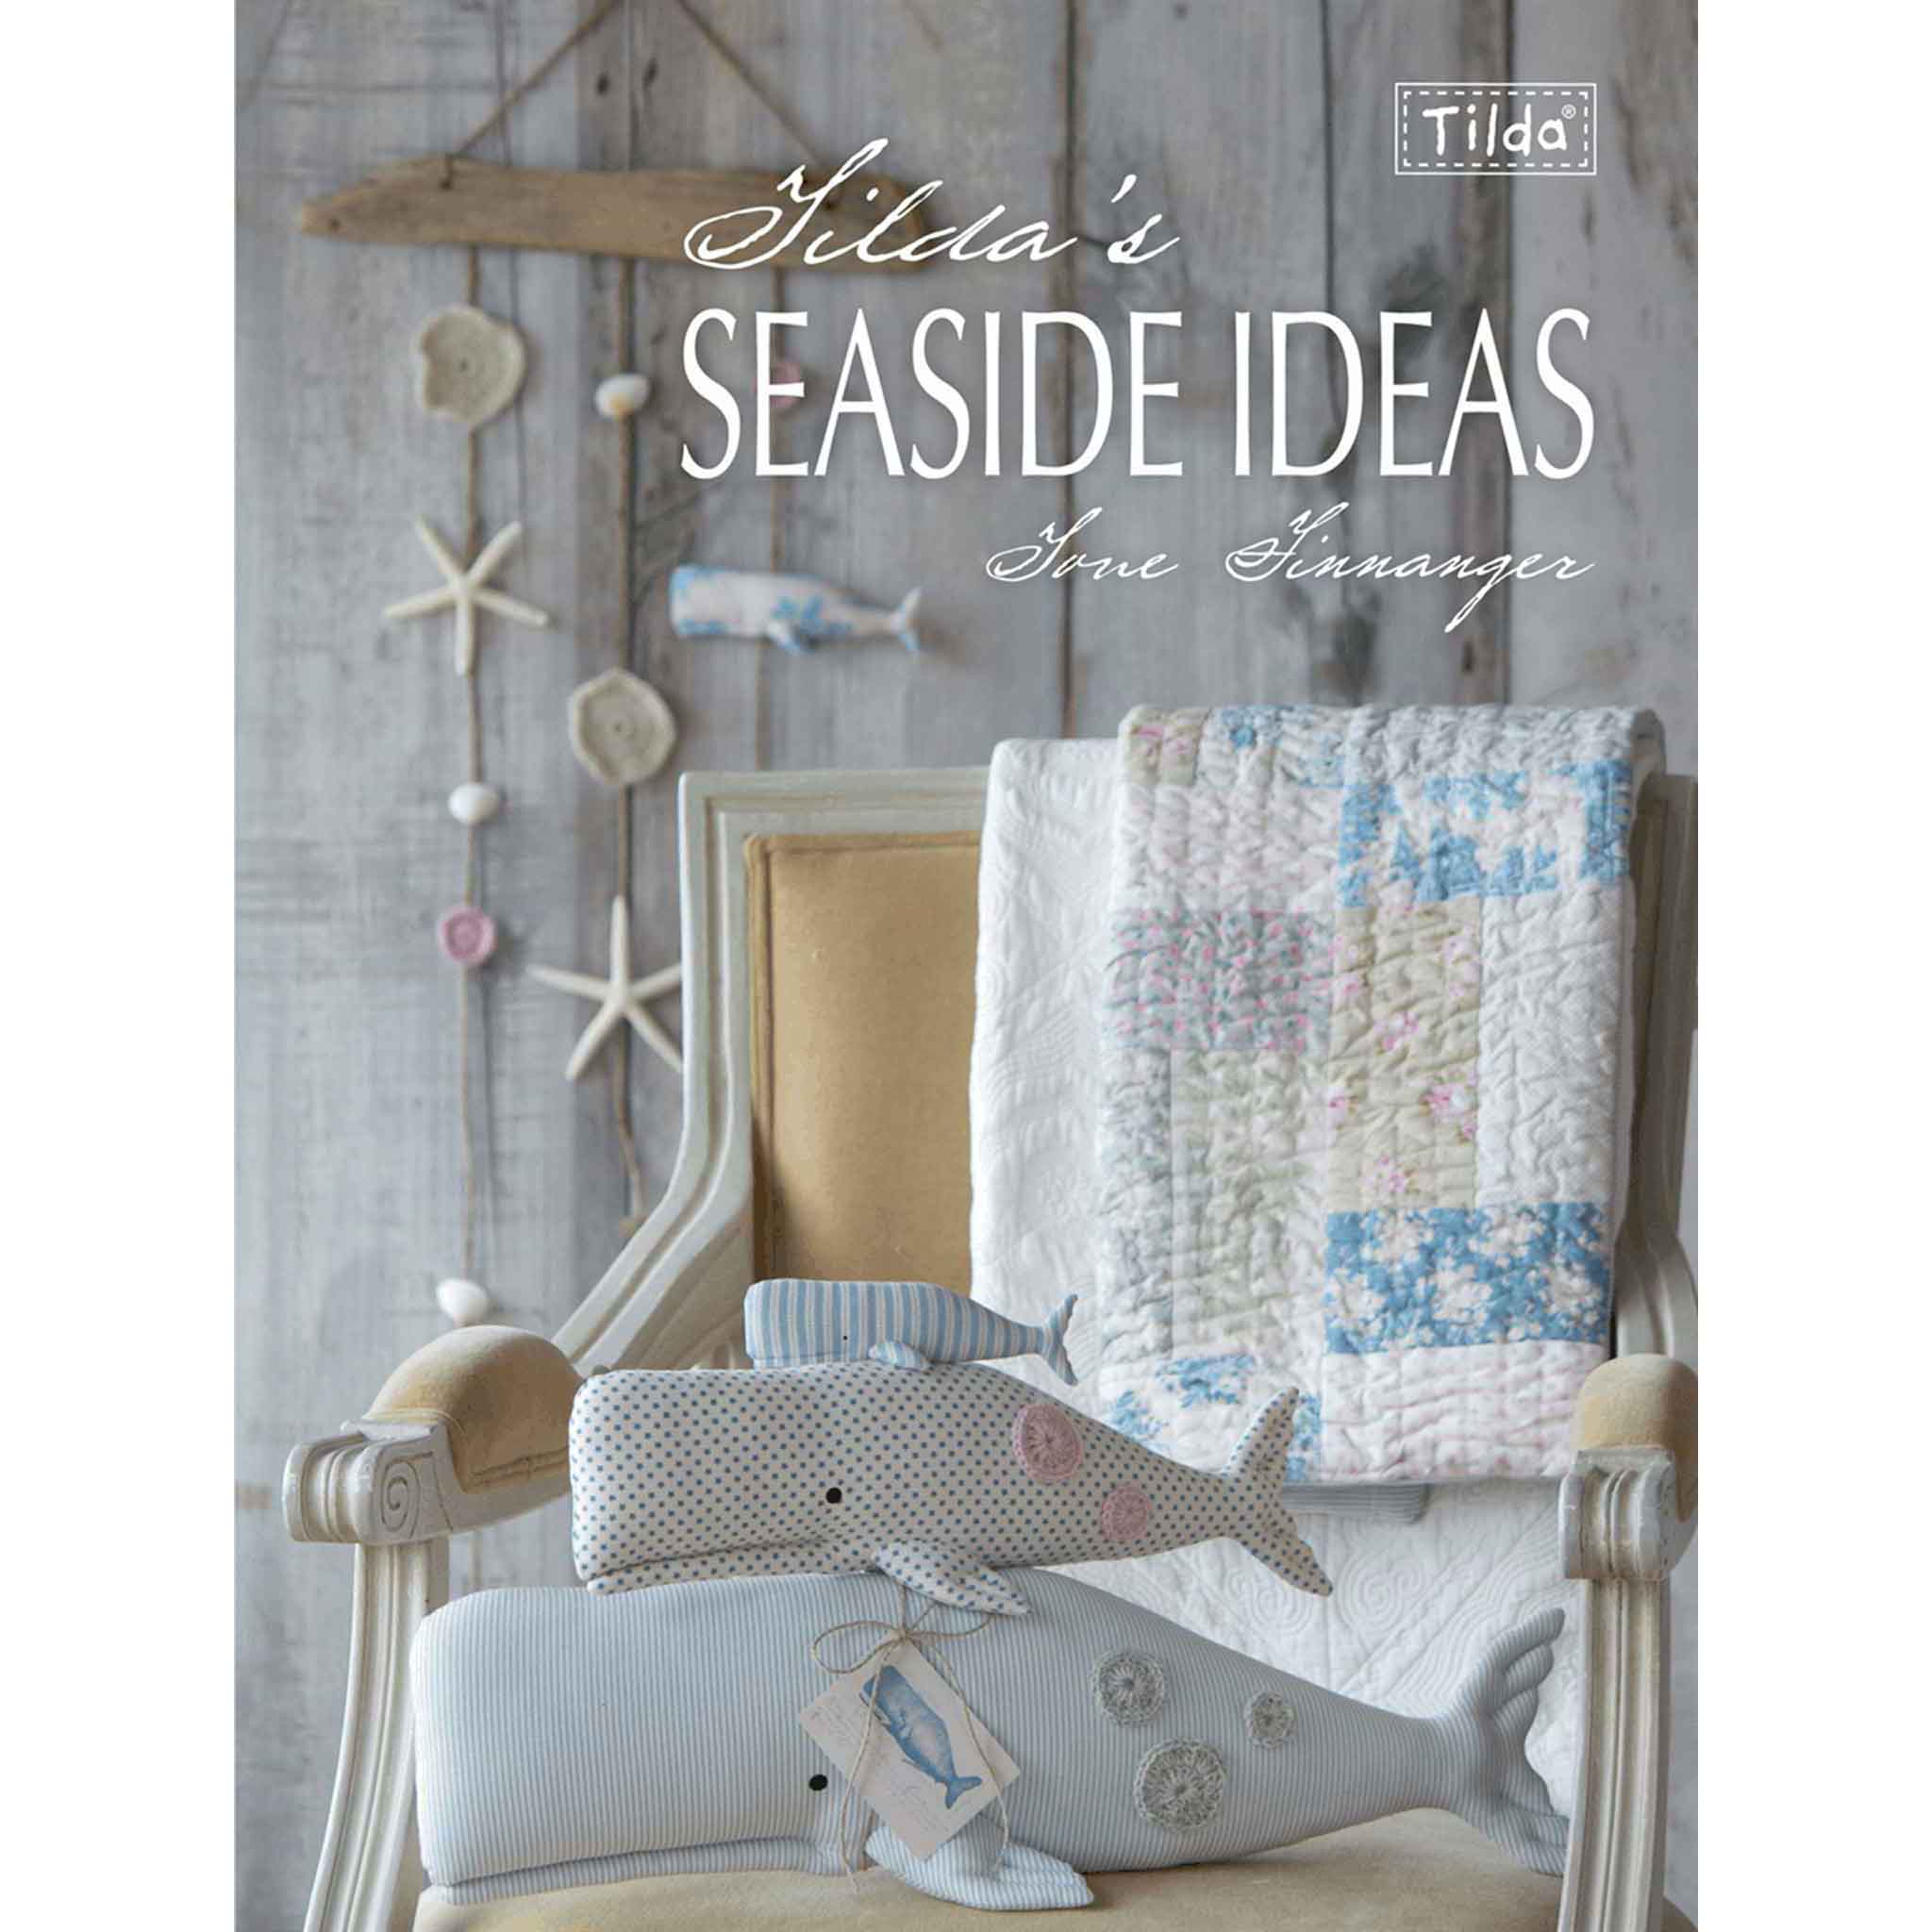 Book - Tilda's Seaside Ideas